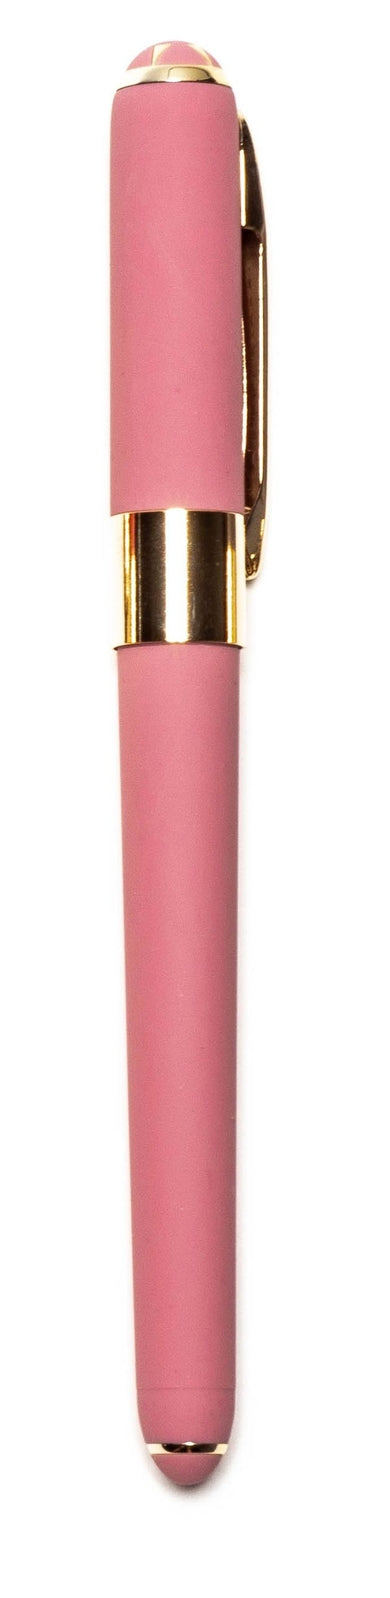 Pink Monaco Pen